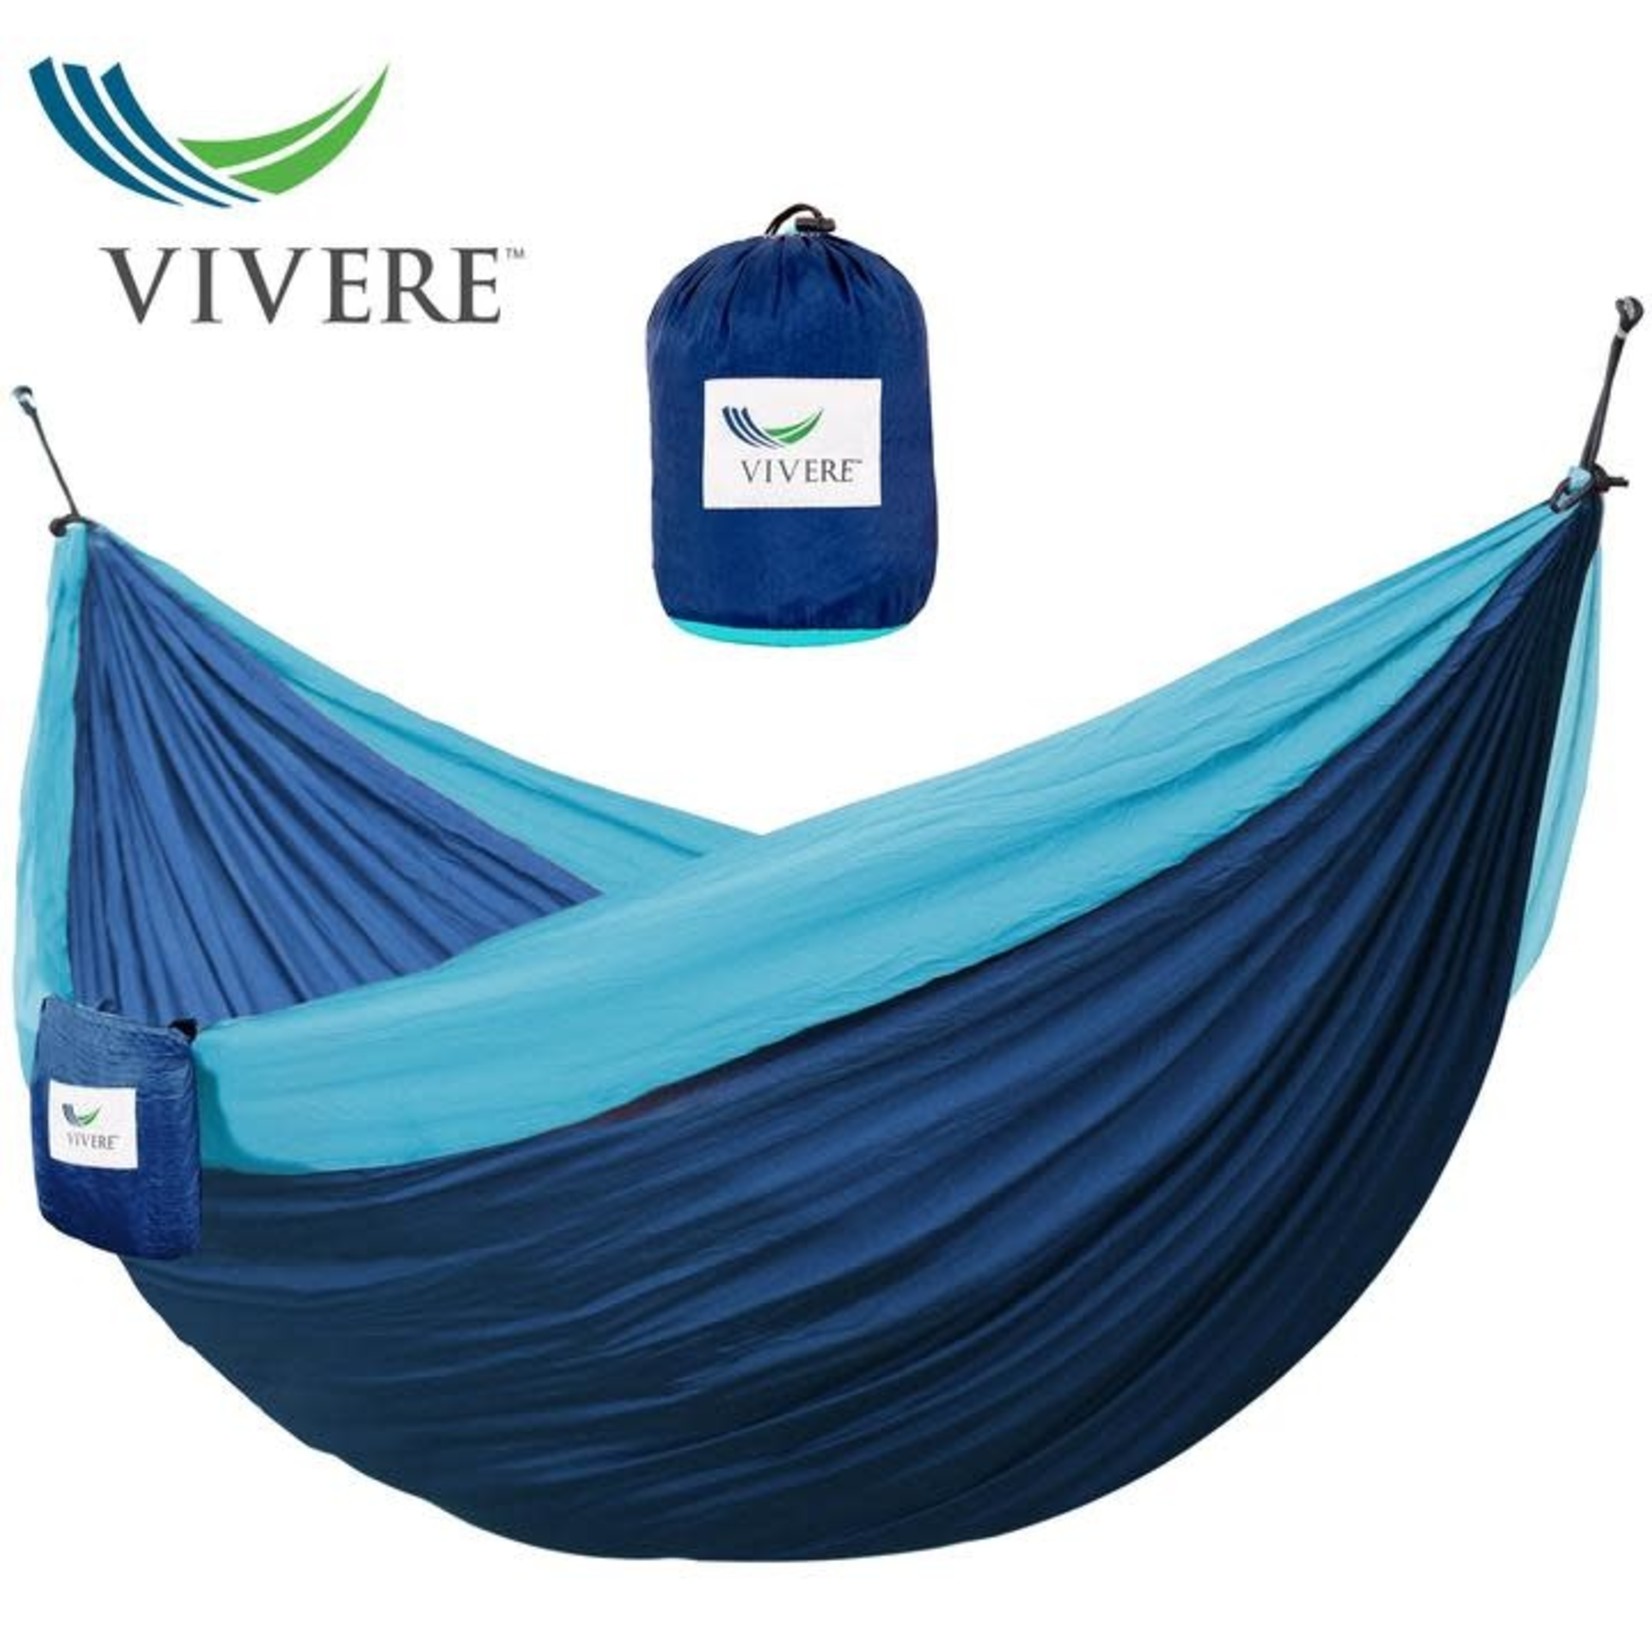 Vivere Double Parachute Hammock - Navy/Turquoise